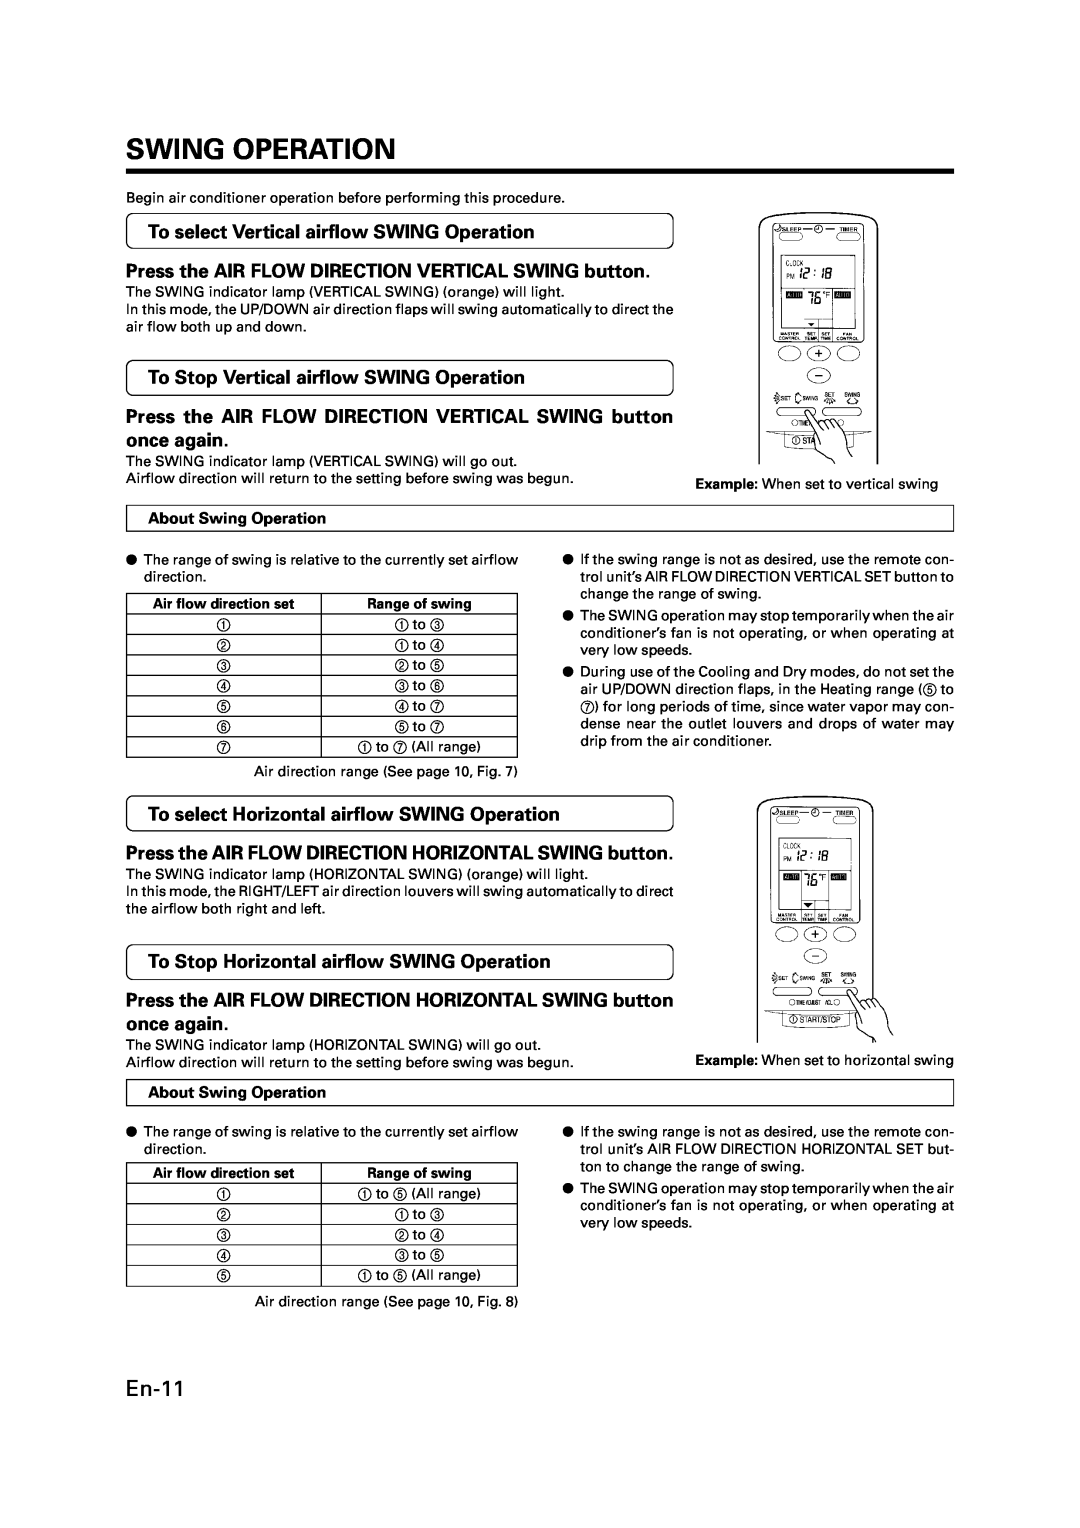 Fujitsu P/N9359944058 manual Swing Operation, En-11, To select Vertical airflow SWING Operation, Air flow direction set 